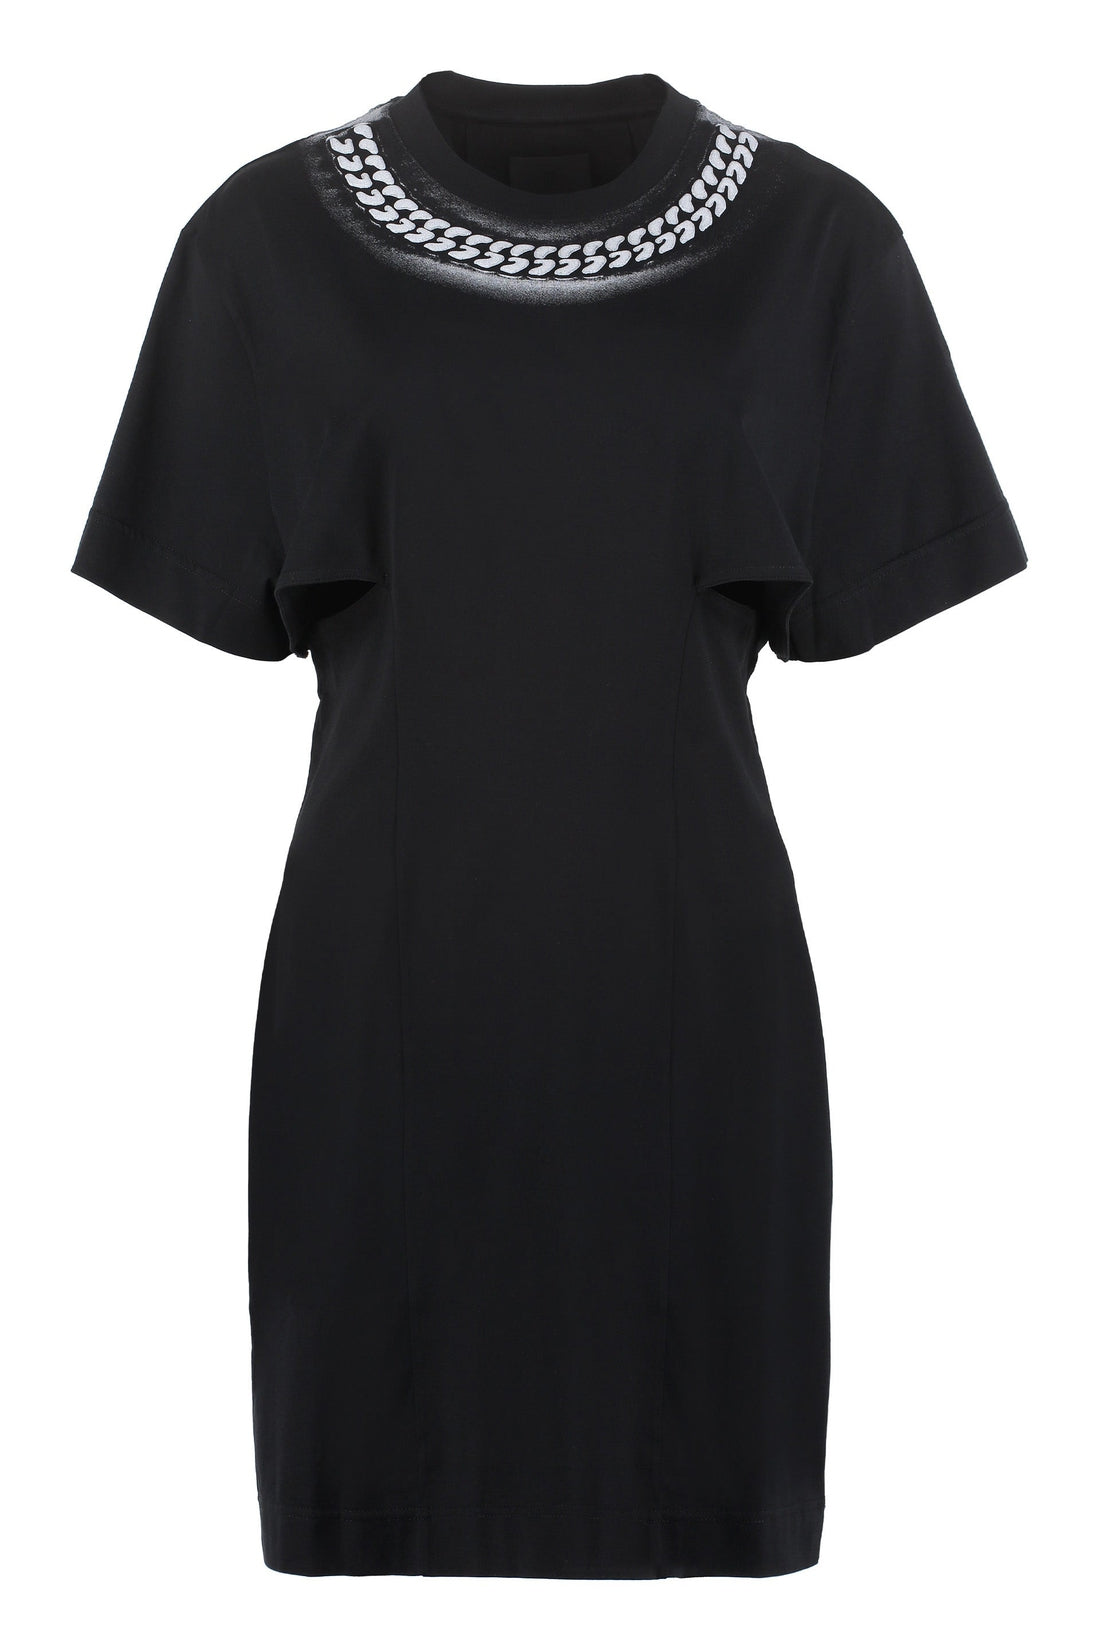 Givenchy-OUTLET-SALE-Jersey dress-ARCHIVIST